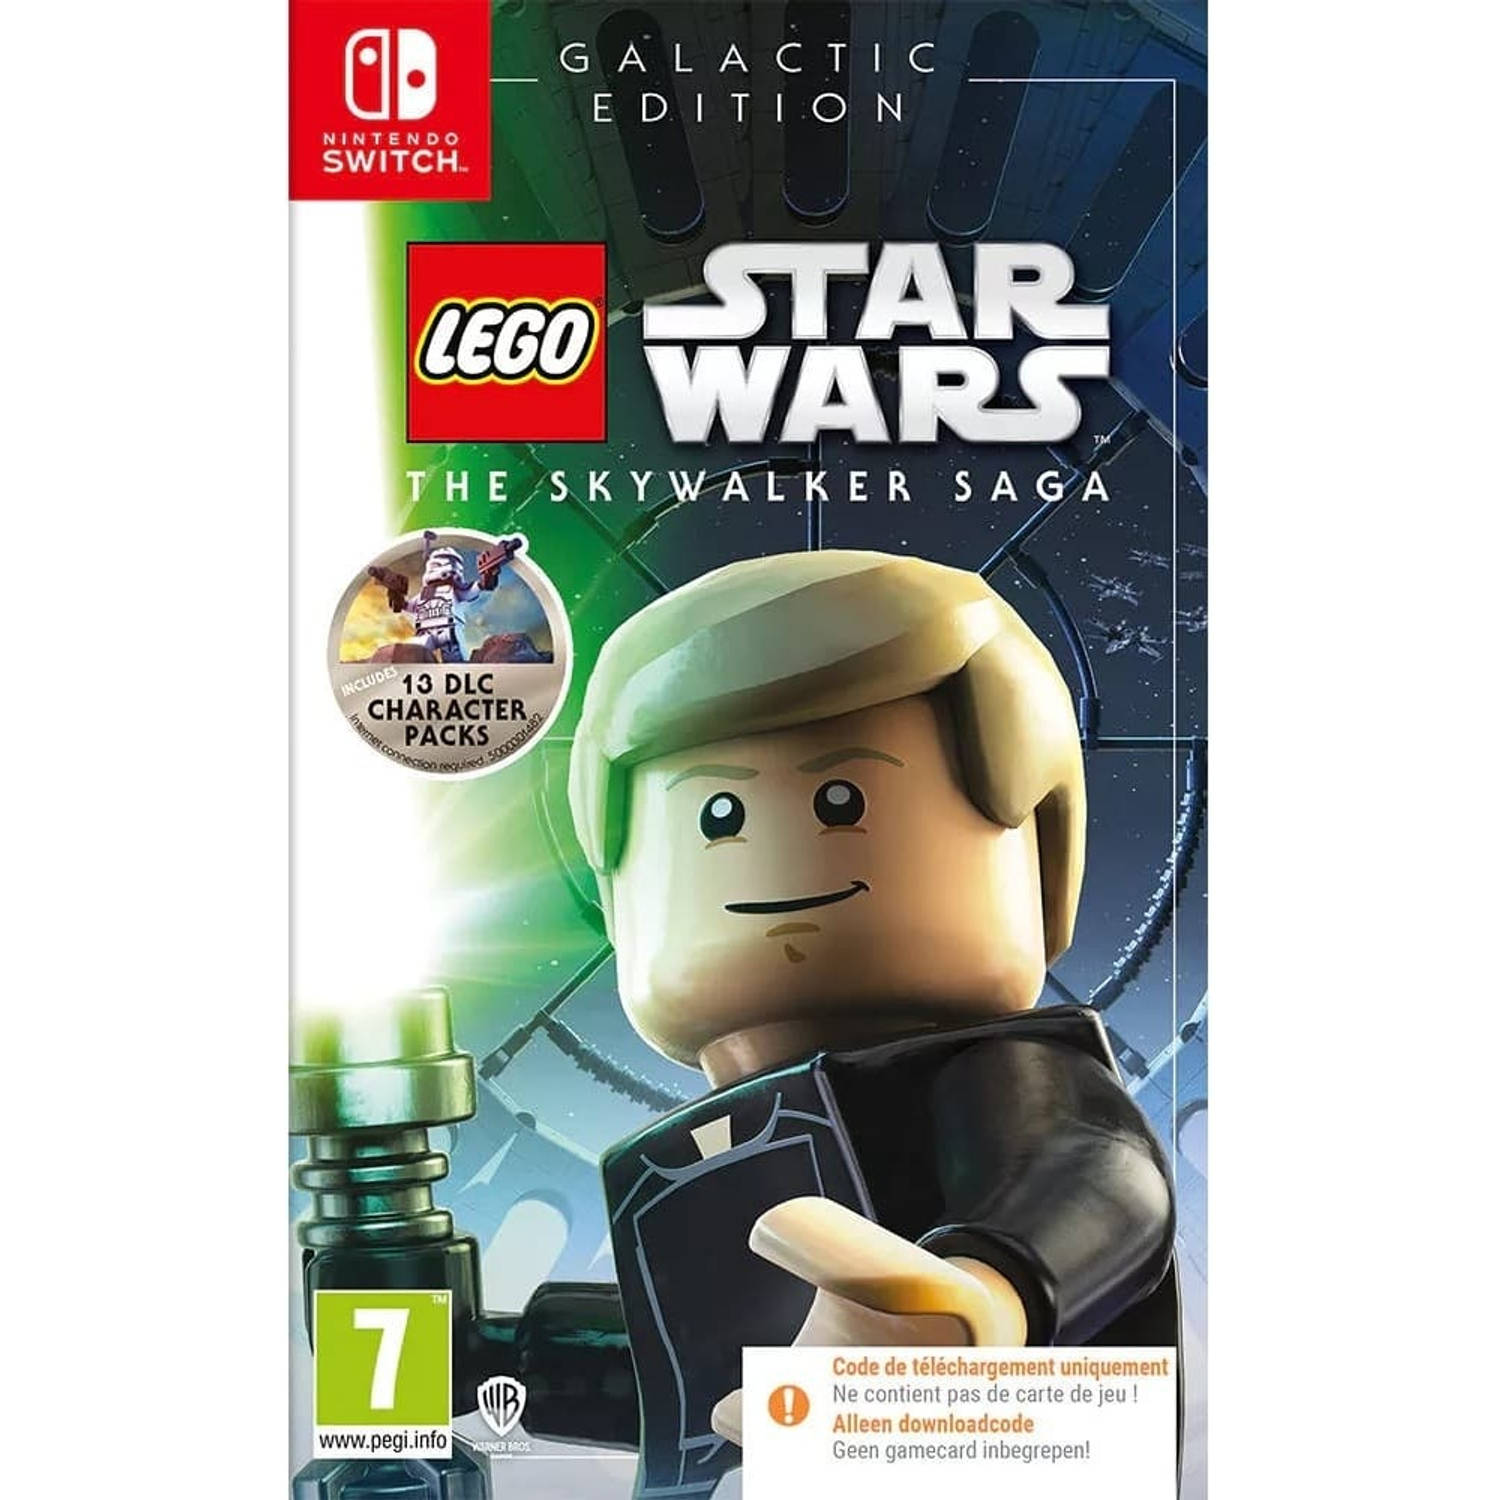 LEGO Star Wars: The Skywalker Saga Galactic Edition (Code in box) Nintendo Switch